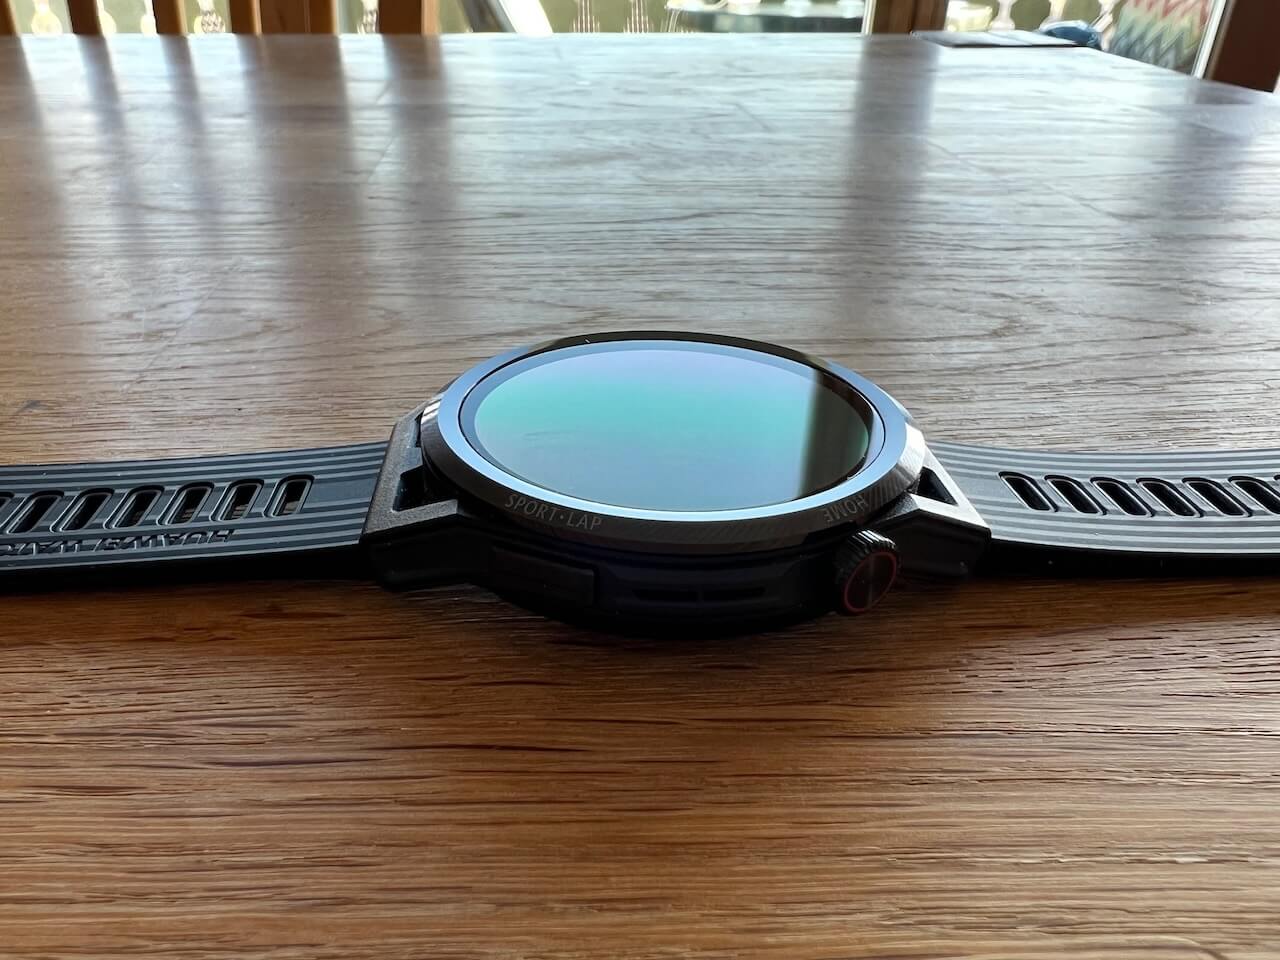 Huawei Watch GT Runner